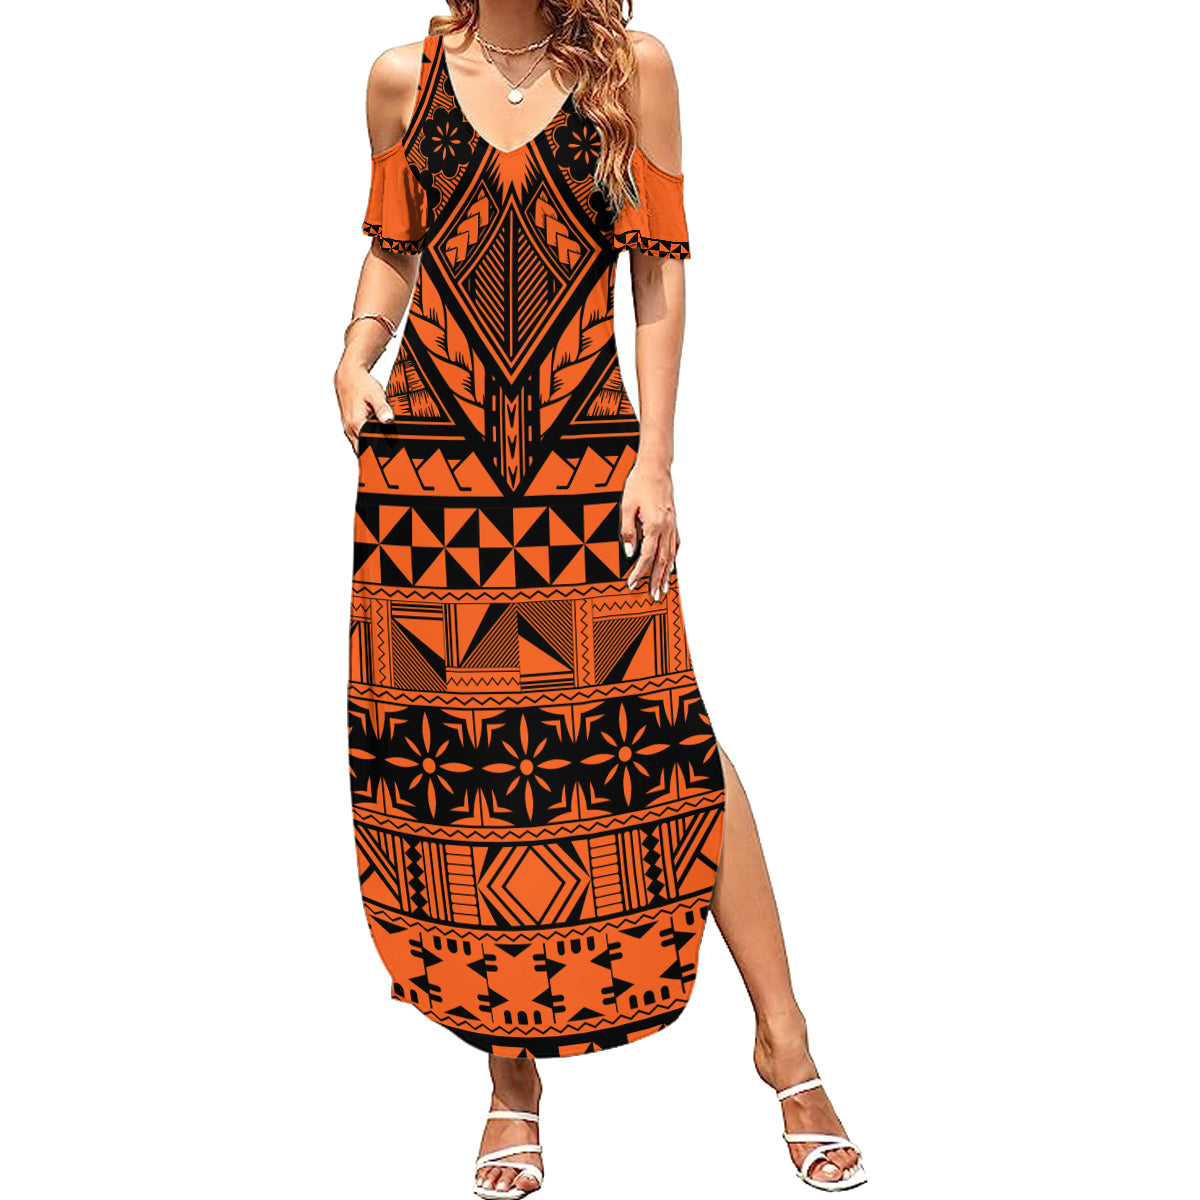 Halo Olaketa Solomon Islands Summer Maxi Dress Melanesian Tribal Pattern Orange Version LT14 Women Orange - Polynesian Pride